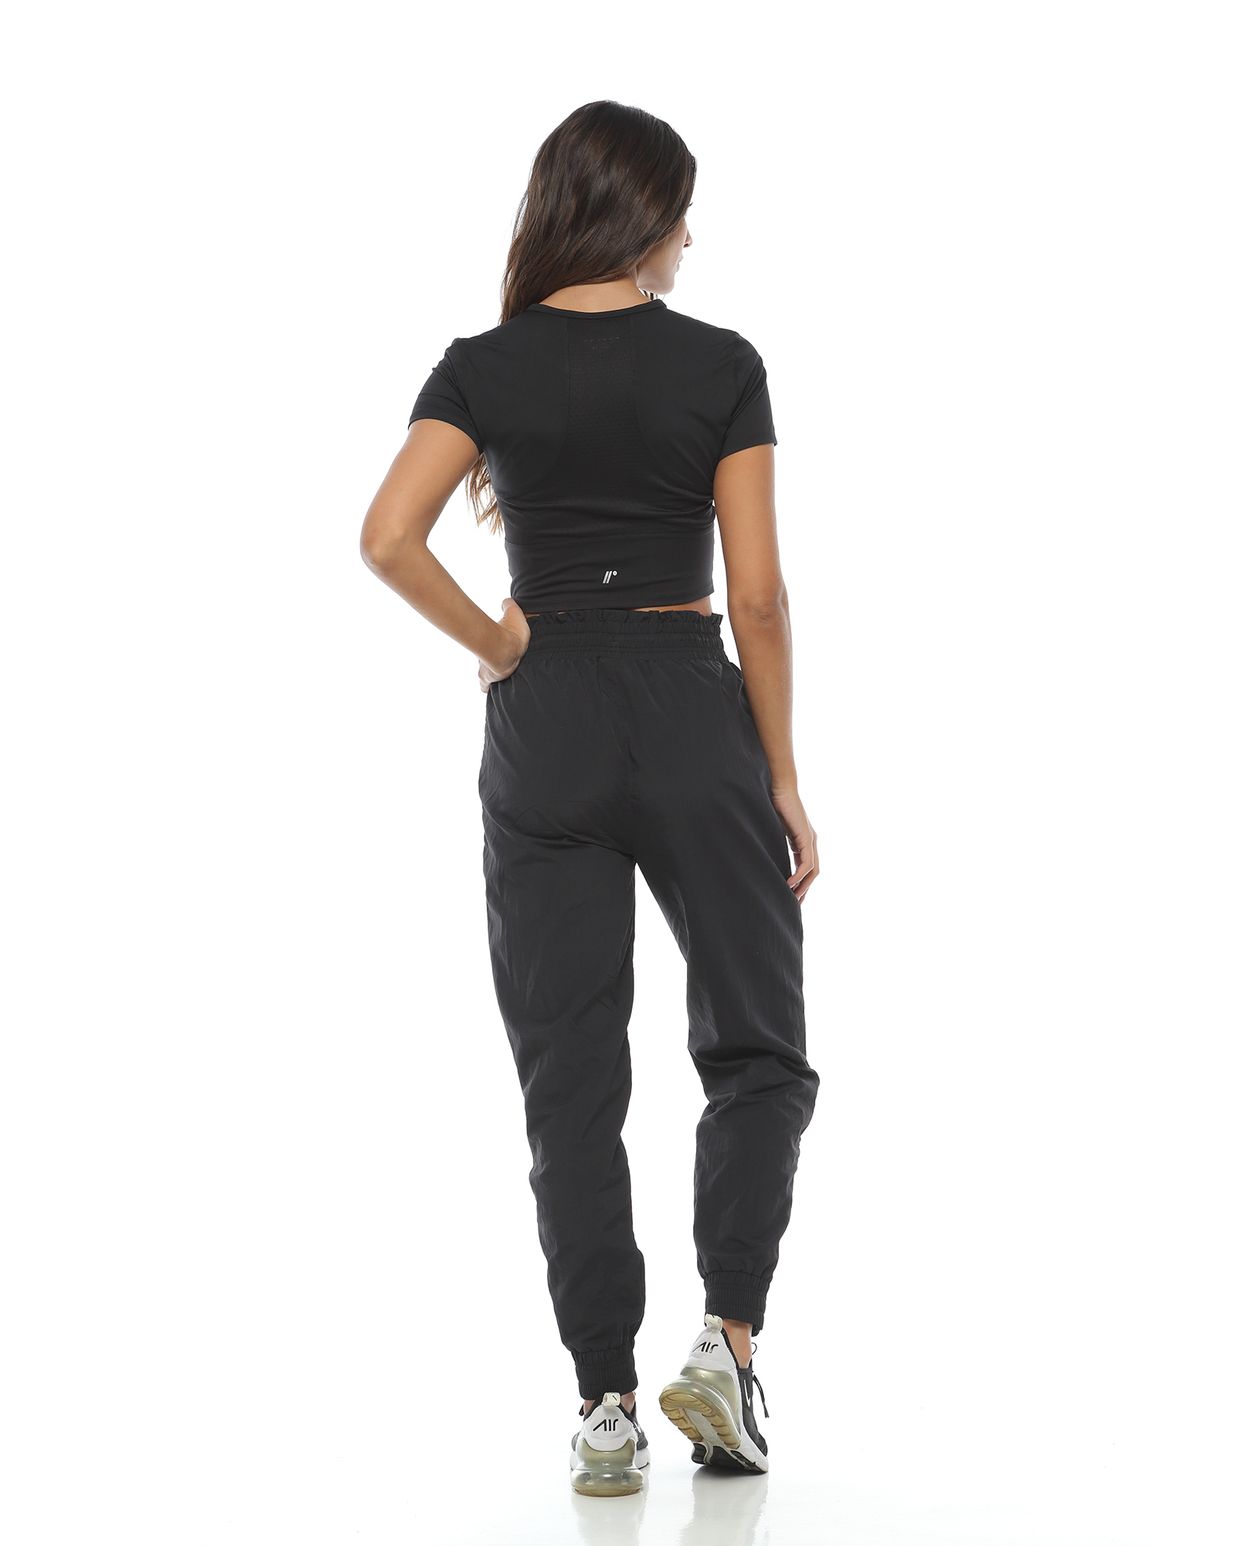 Puloru TNGXXWL - Pantalones deportivos con bolsillos para mujer, Negro, S